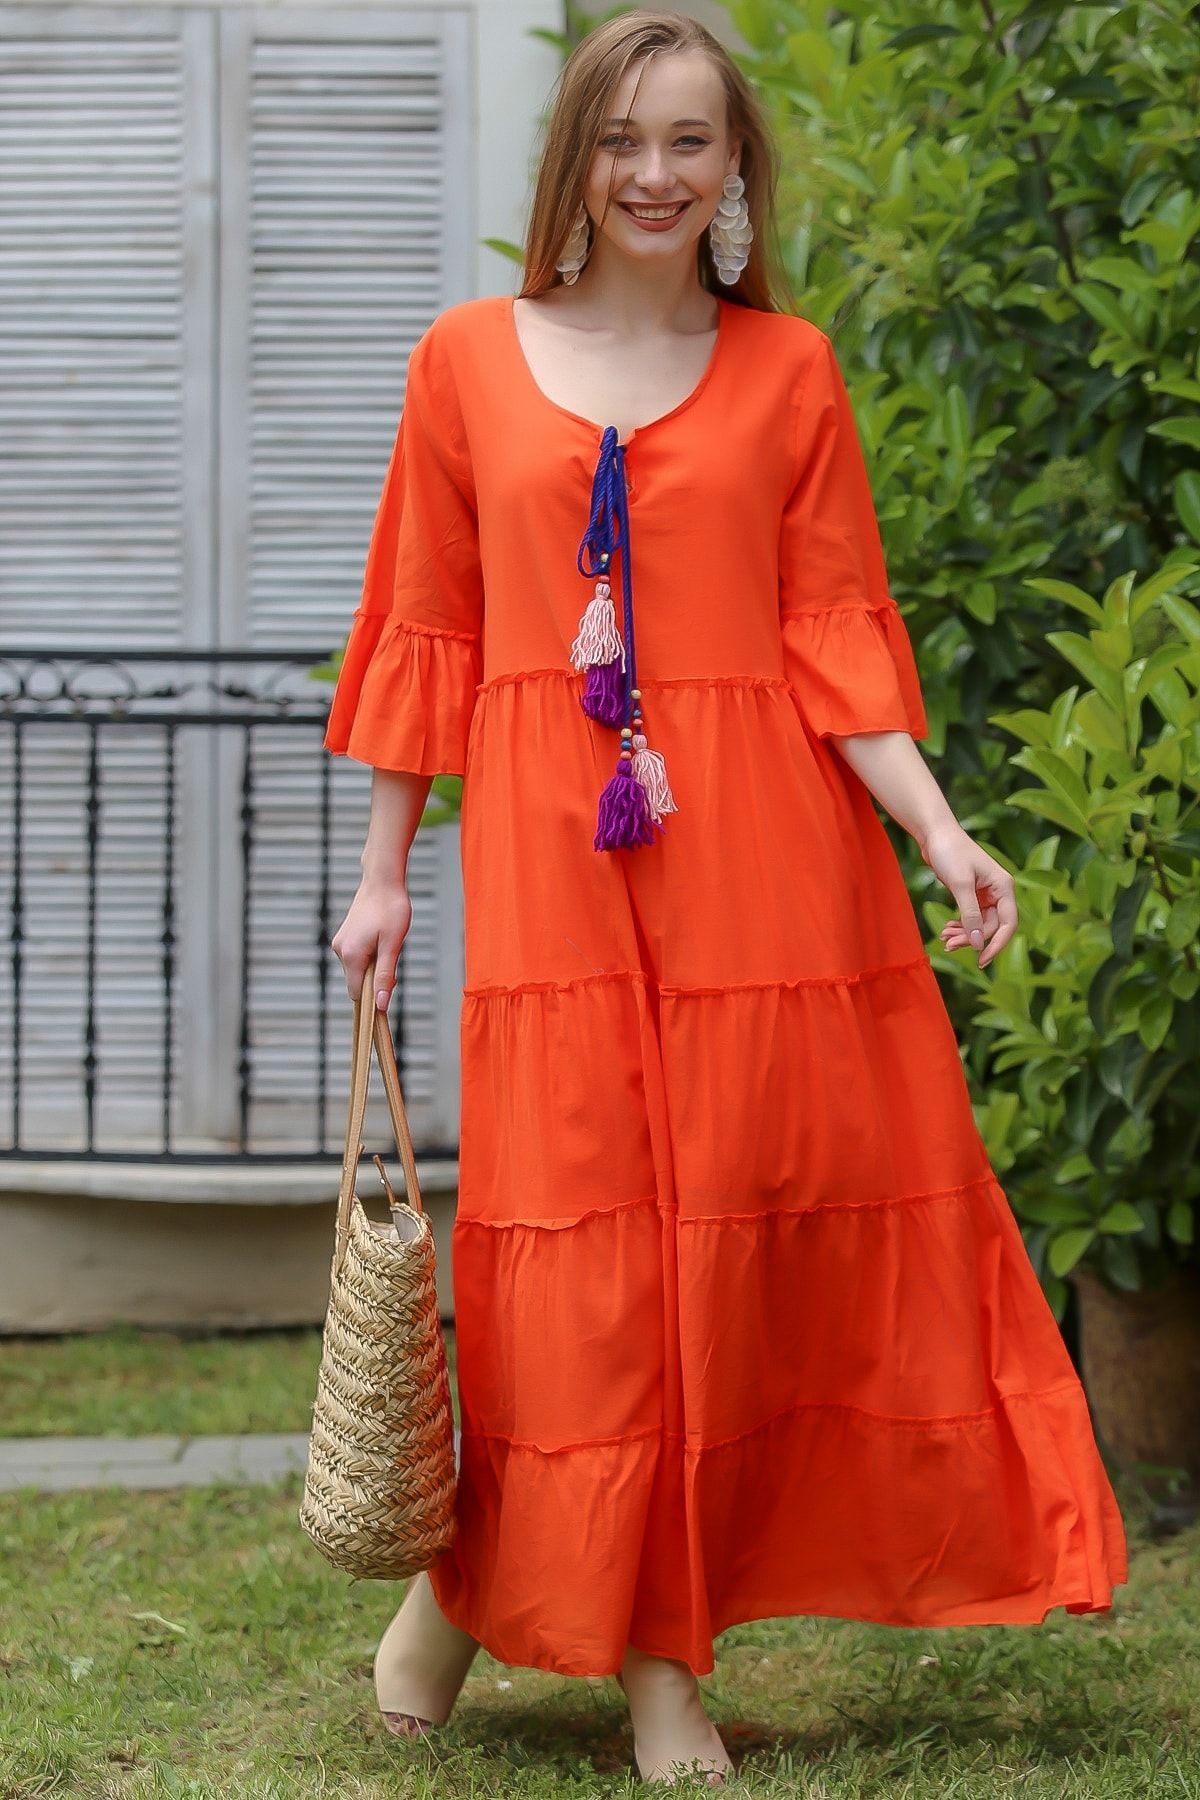 Chiccy Kadın Turuncu Vintage Oversize El Yapımı Mix Renkli Püskül Detaylı Elbise M10160000El97016